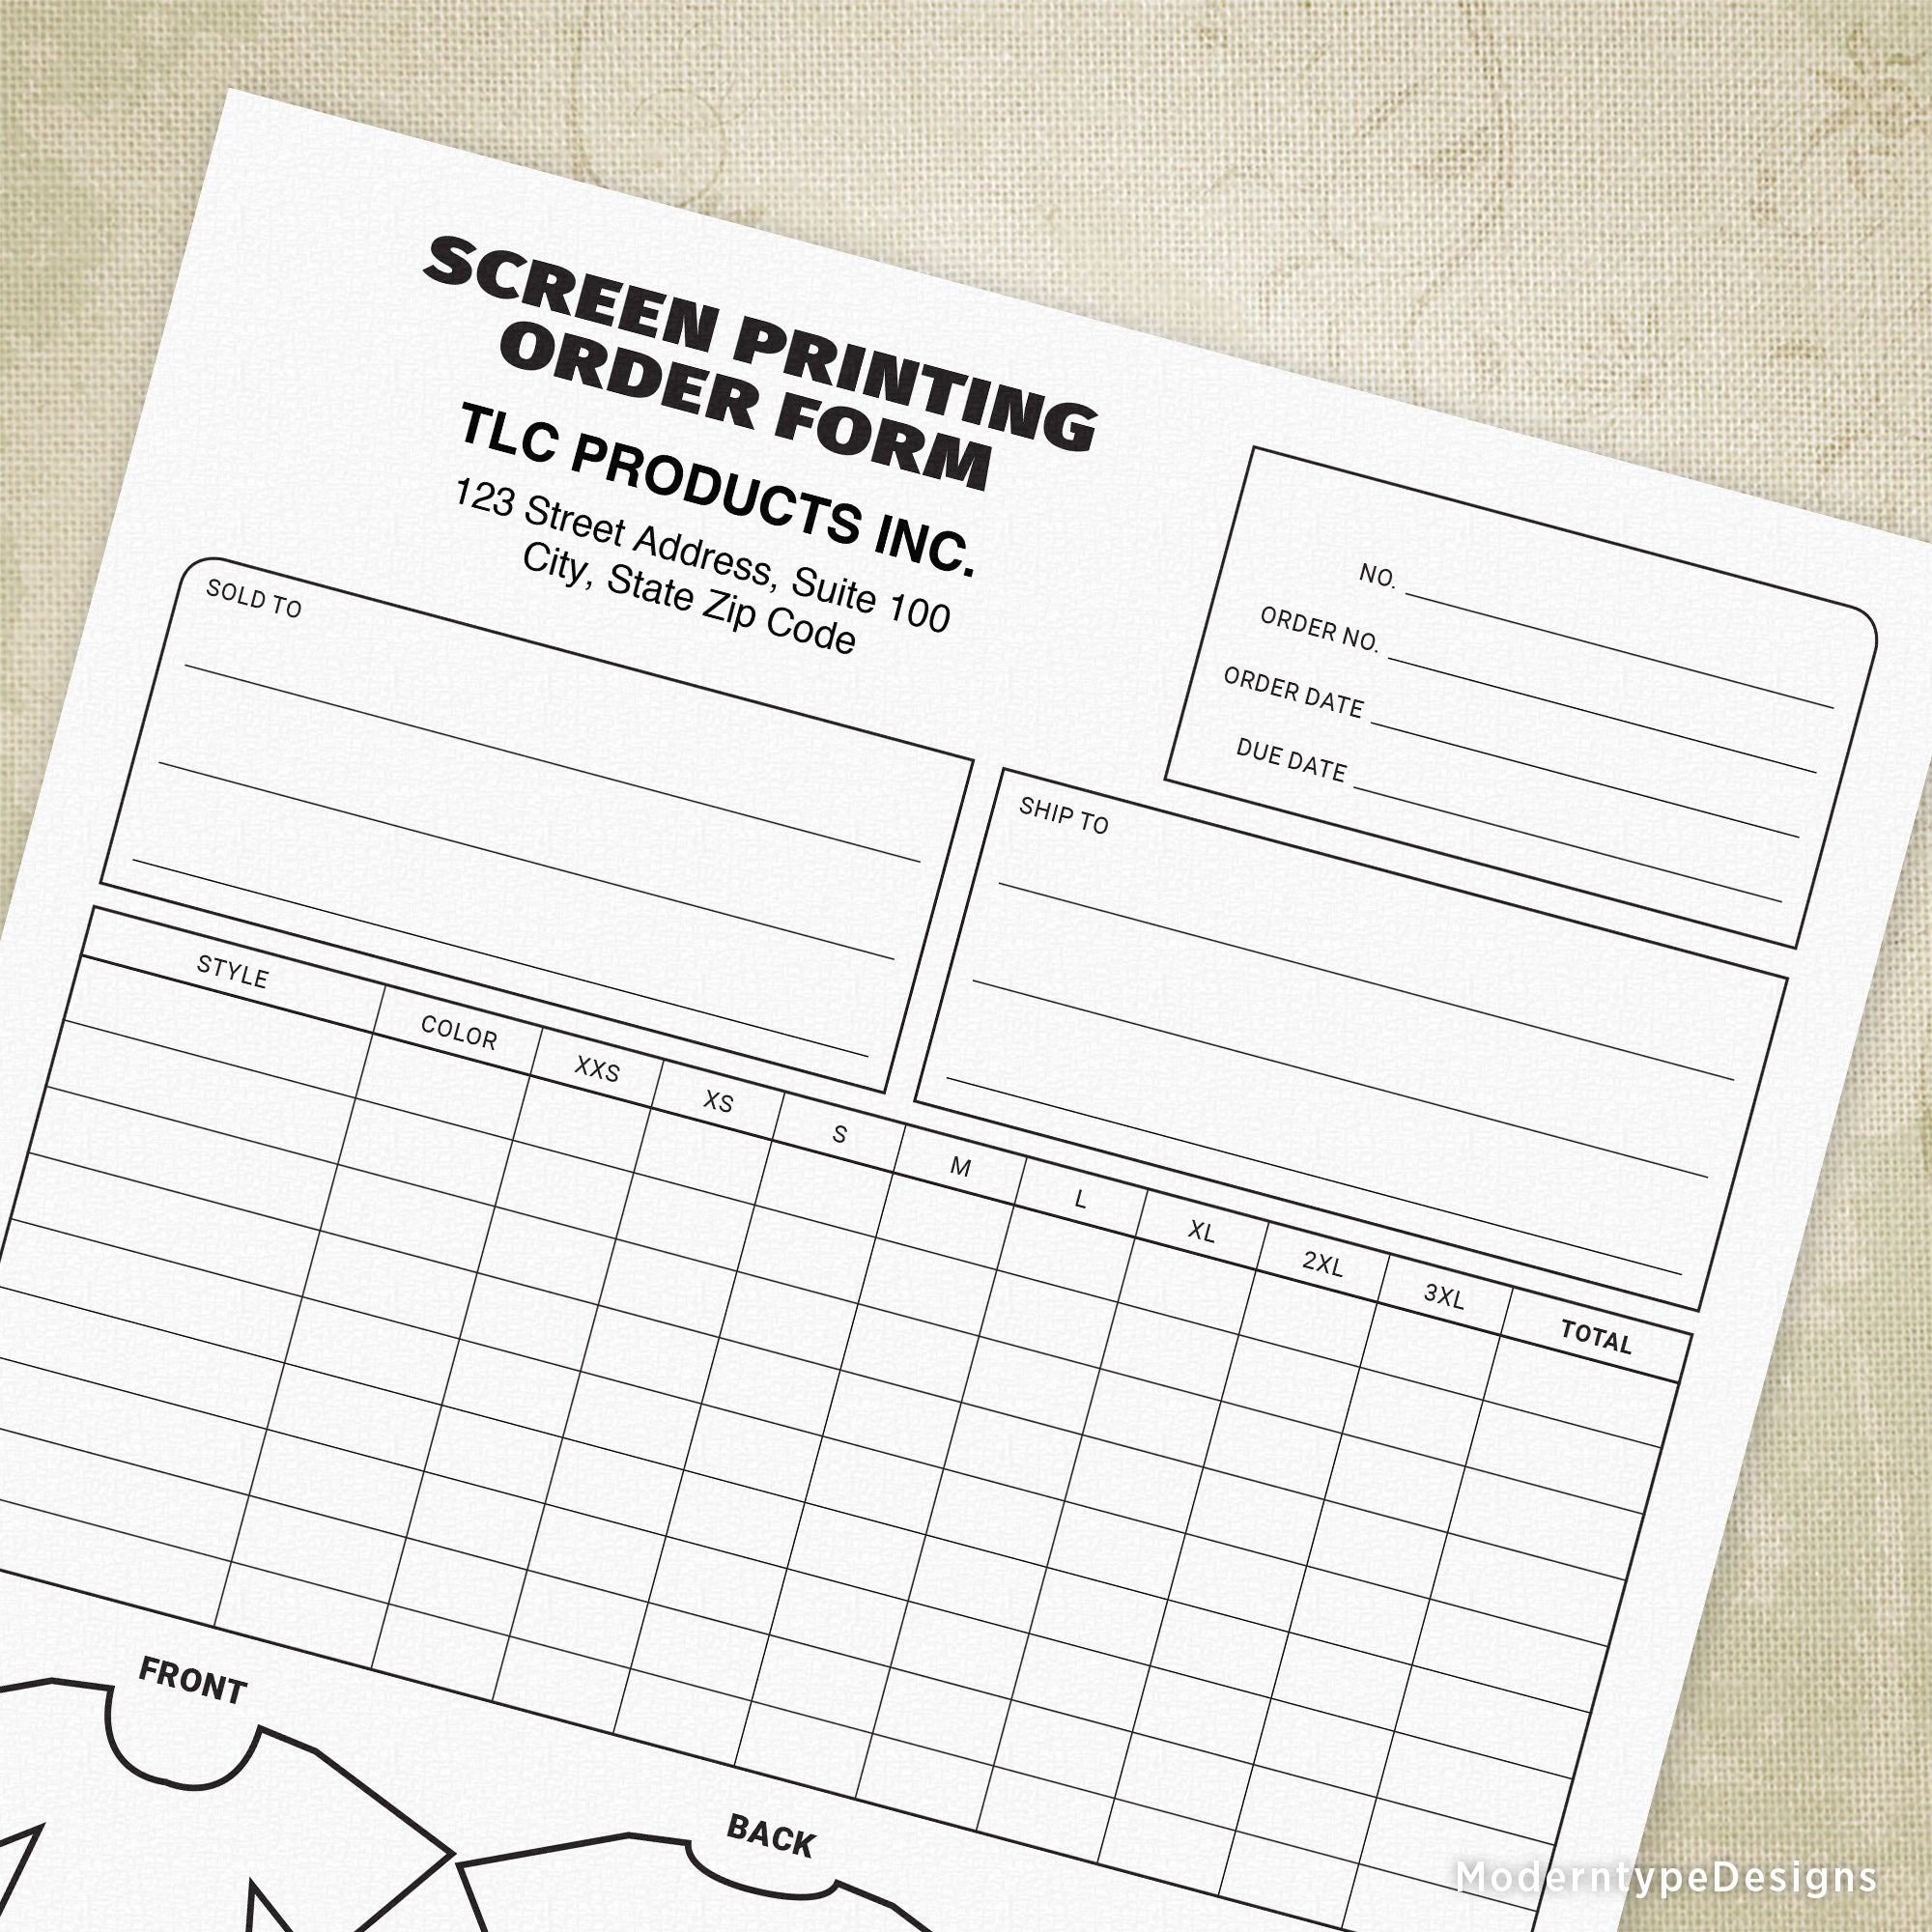 Screen Printing Order Form Printable, Editable, #2